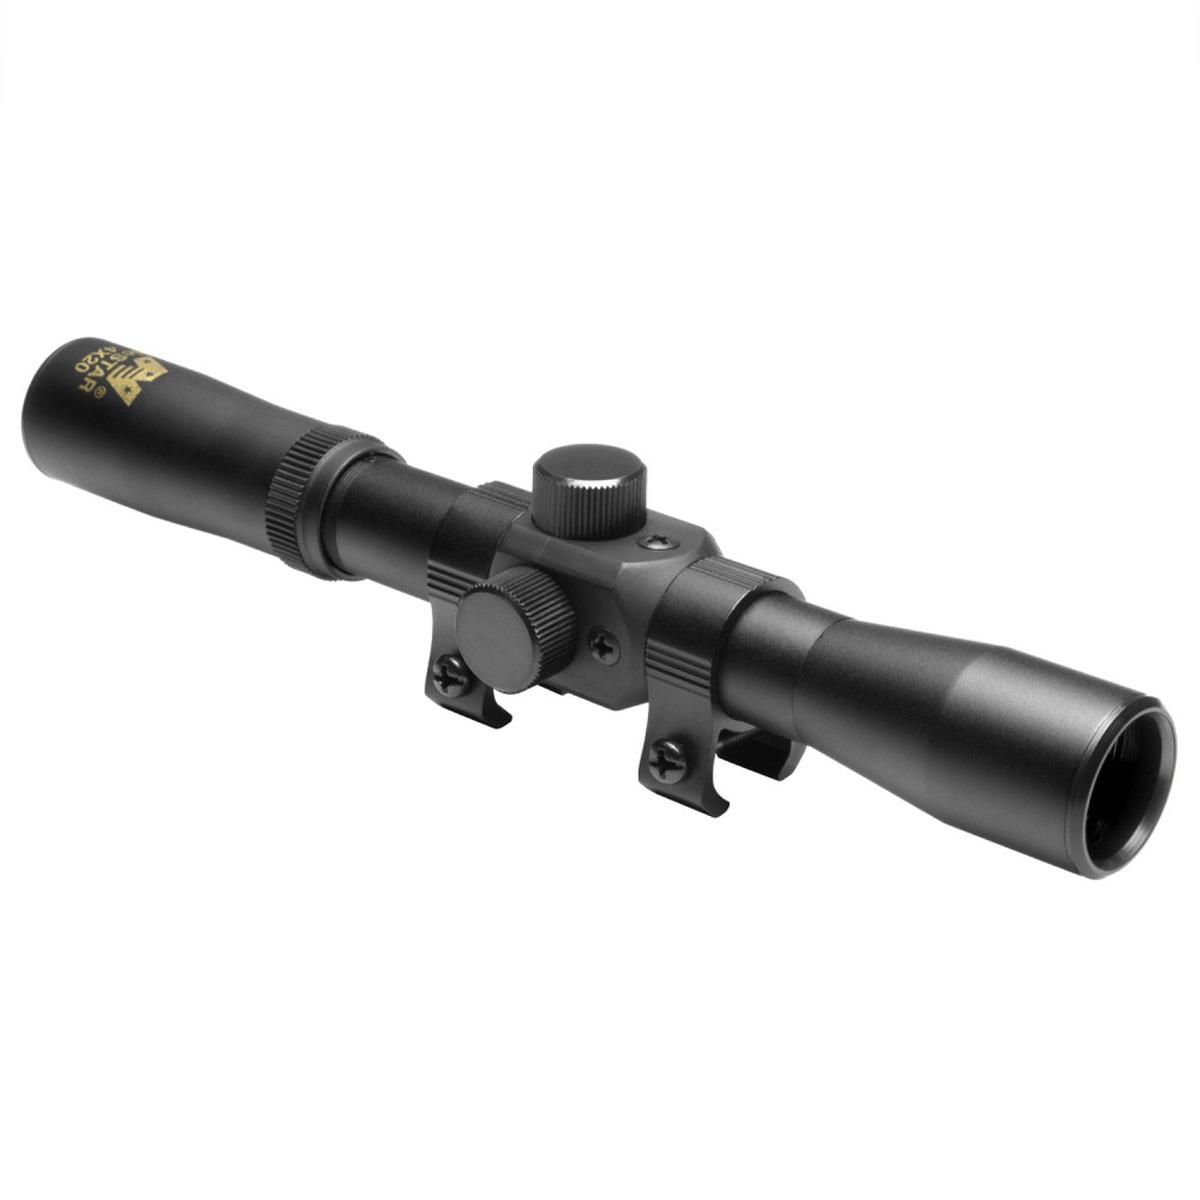 

NcSTAR 4x20mm Compact Tactical Airgun Riflescope with Plex Reticle, Matte Black